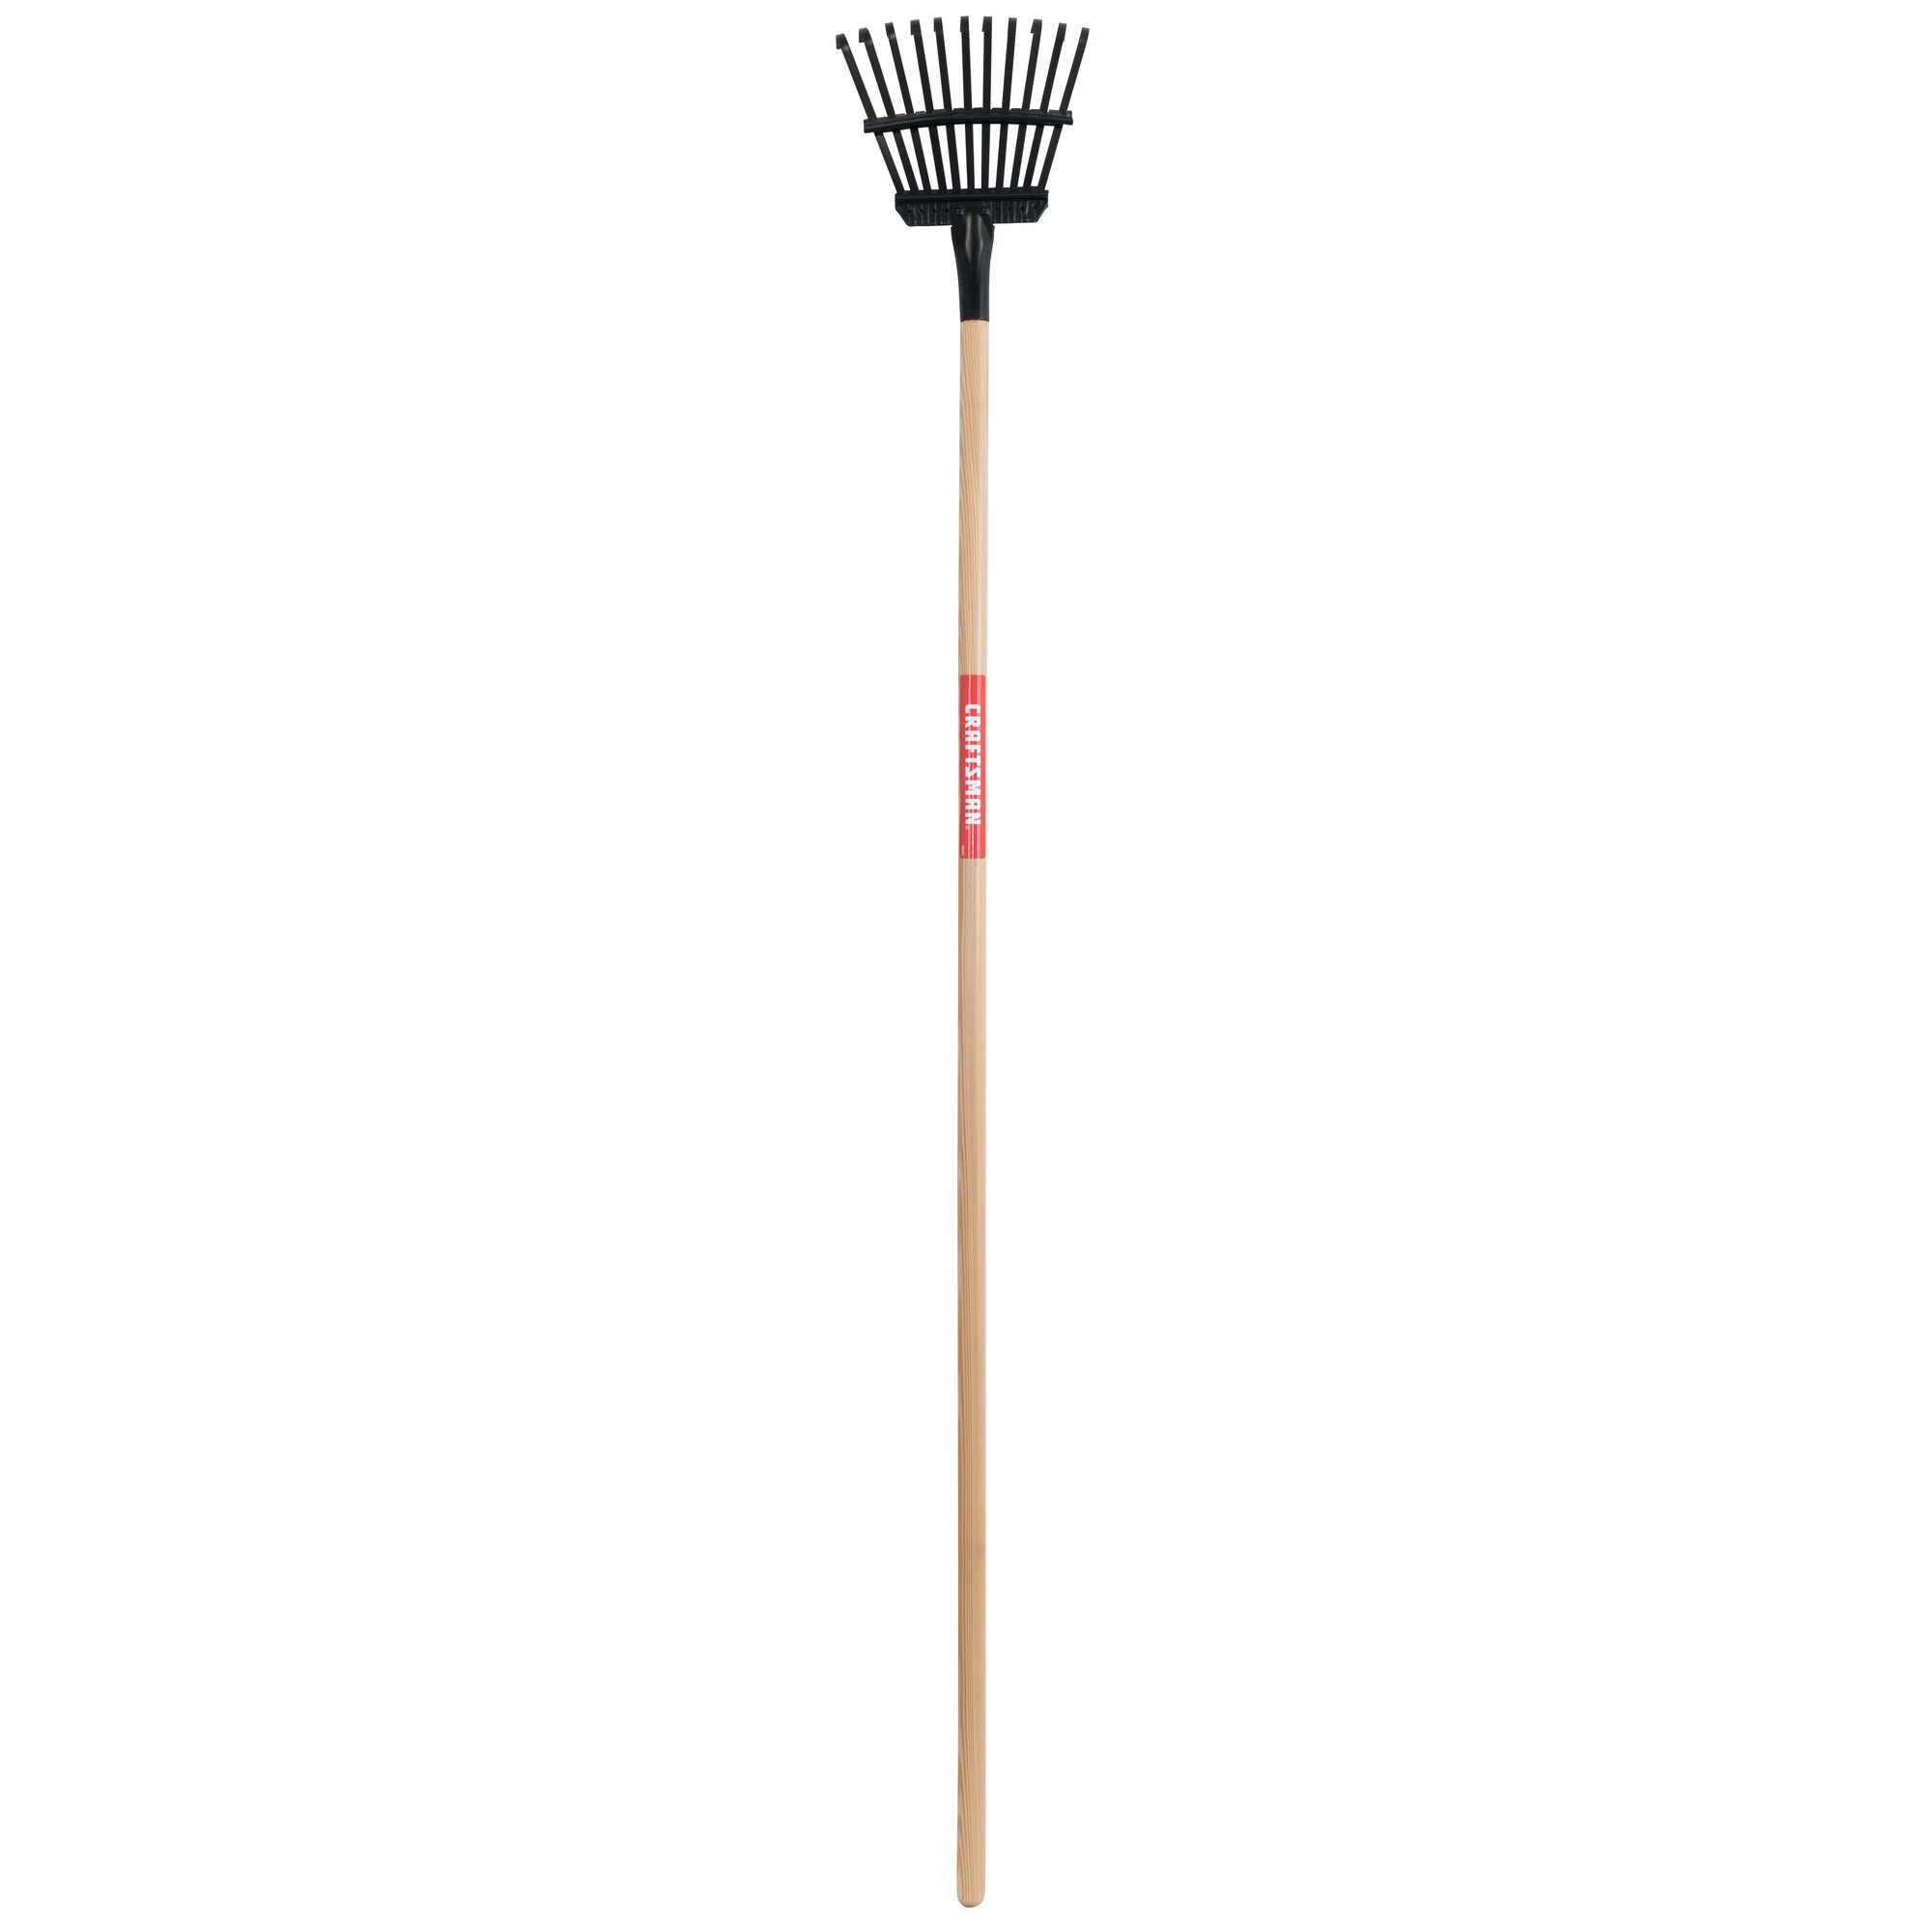 Profile of 11 tine wood handle shrub rake.